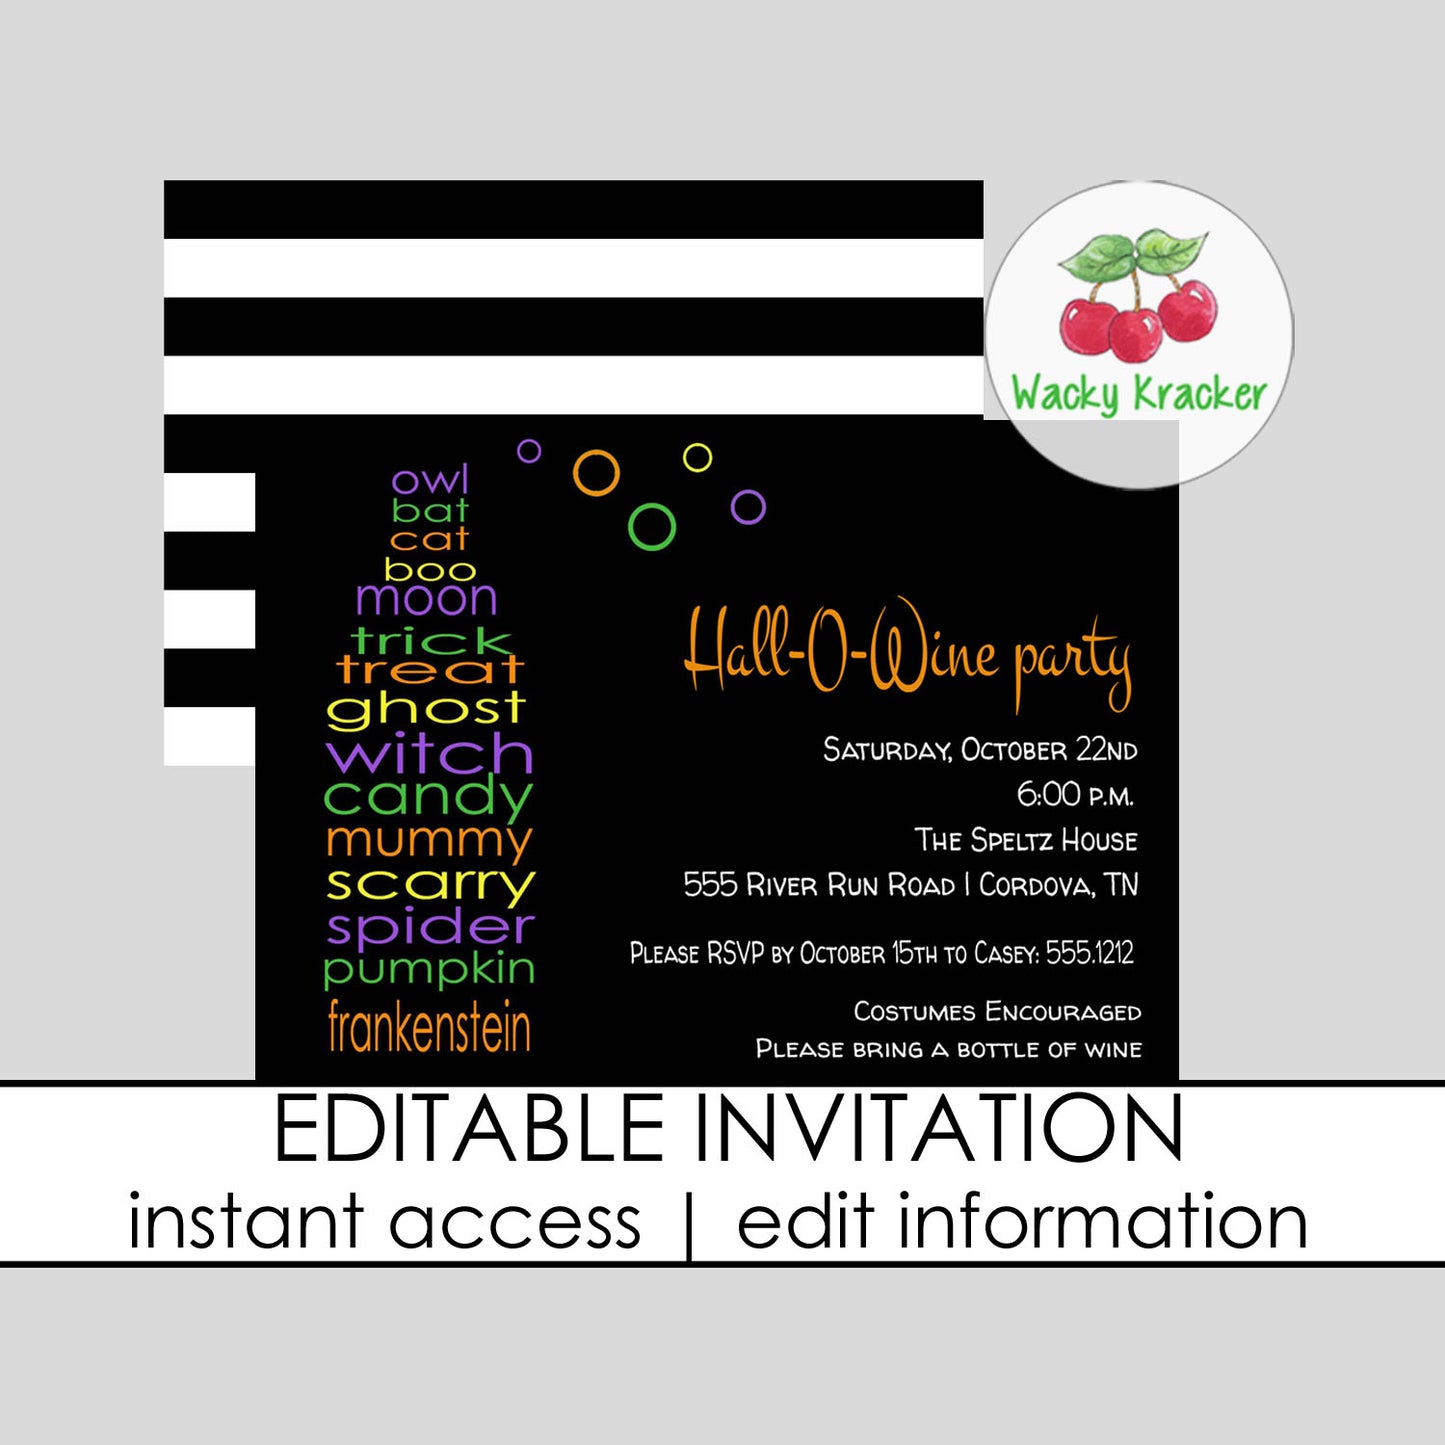 Hallowine Party Invitation